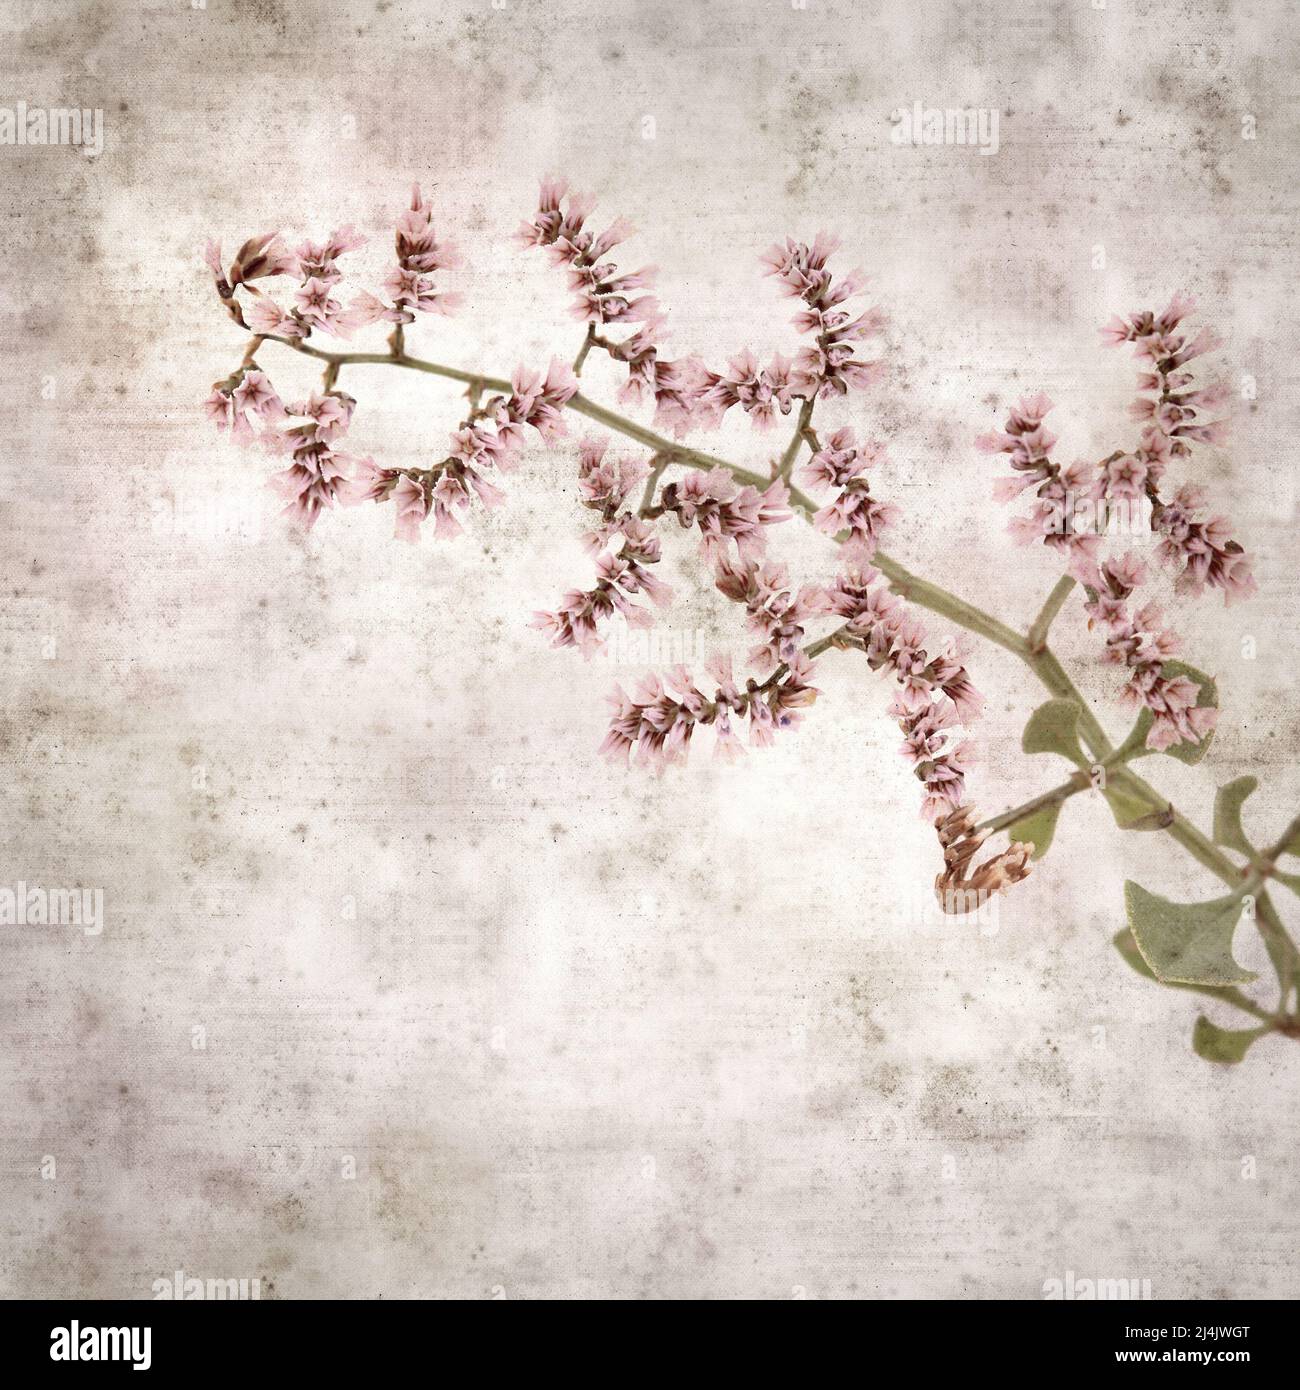 square stylish old textured paper background with pale pink flowers og Limonium pectinatum sea rosemary Stock Photo